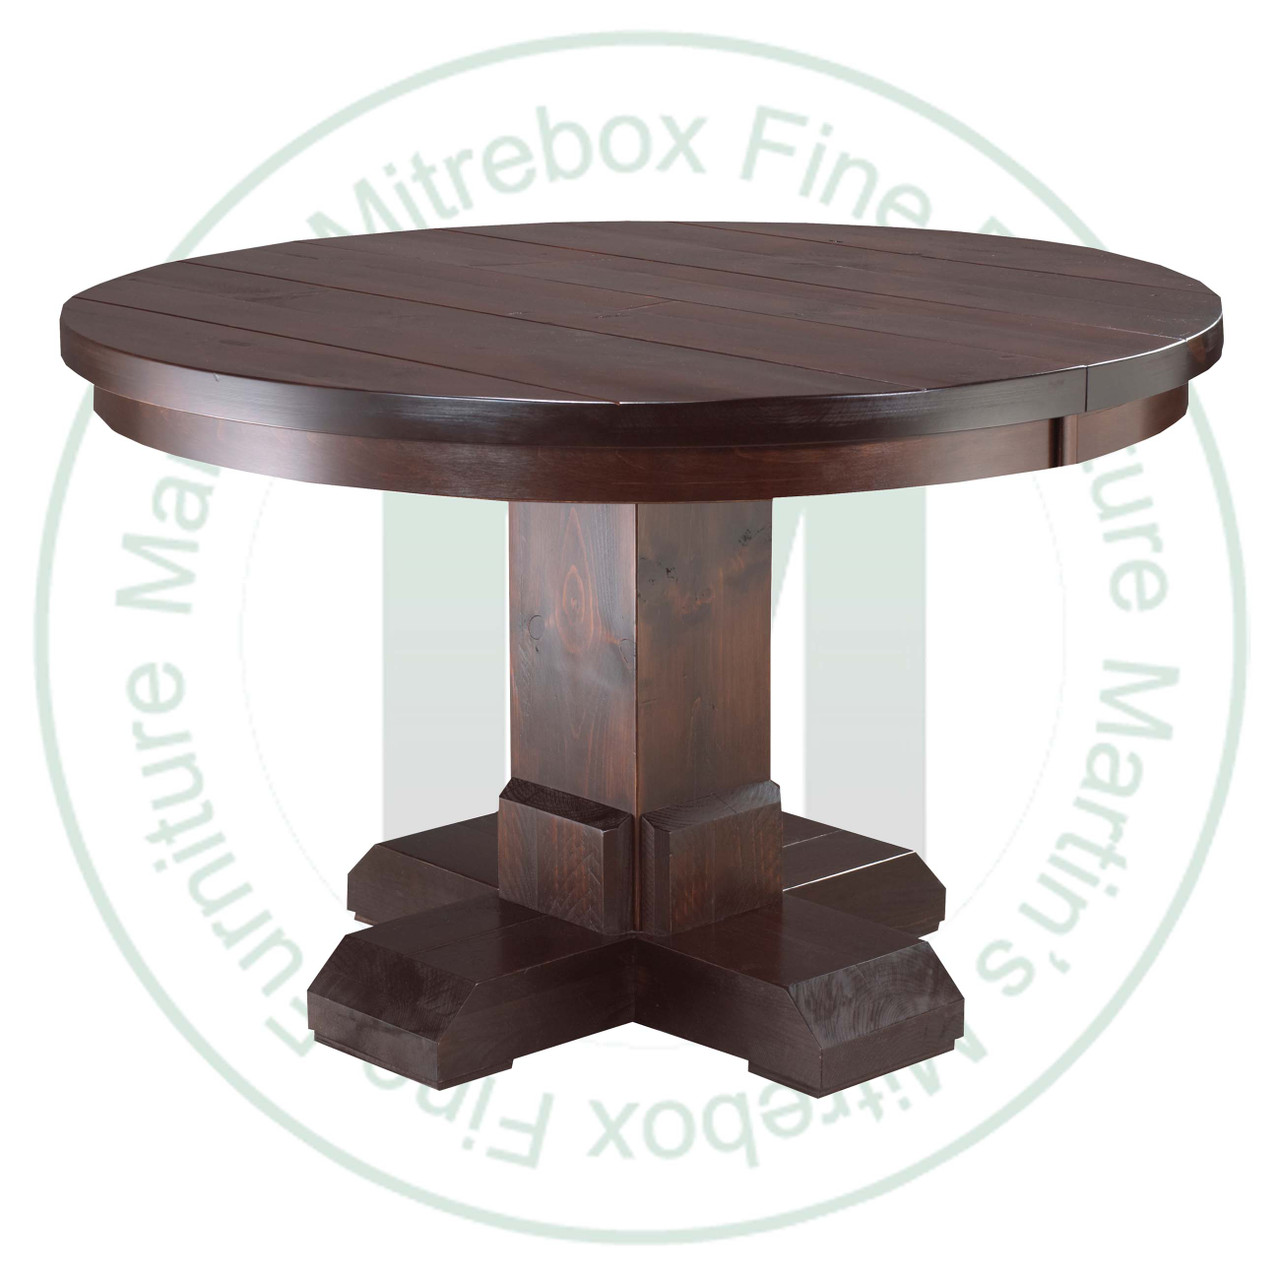 Oak Shrewsbury Single Pedestal Table 36''D x 48''W x 30''H With 1 - 12'' Leaf Table